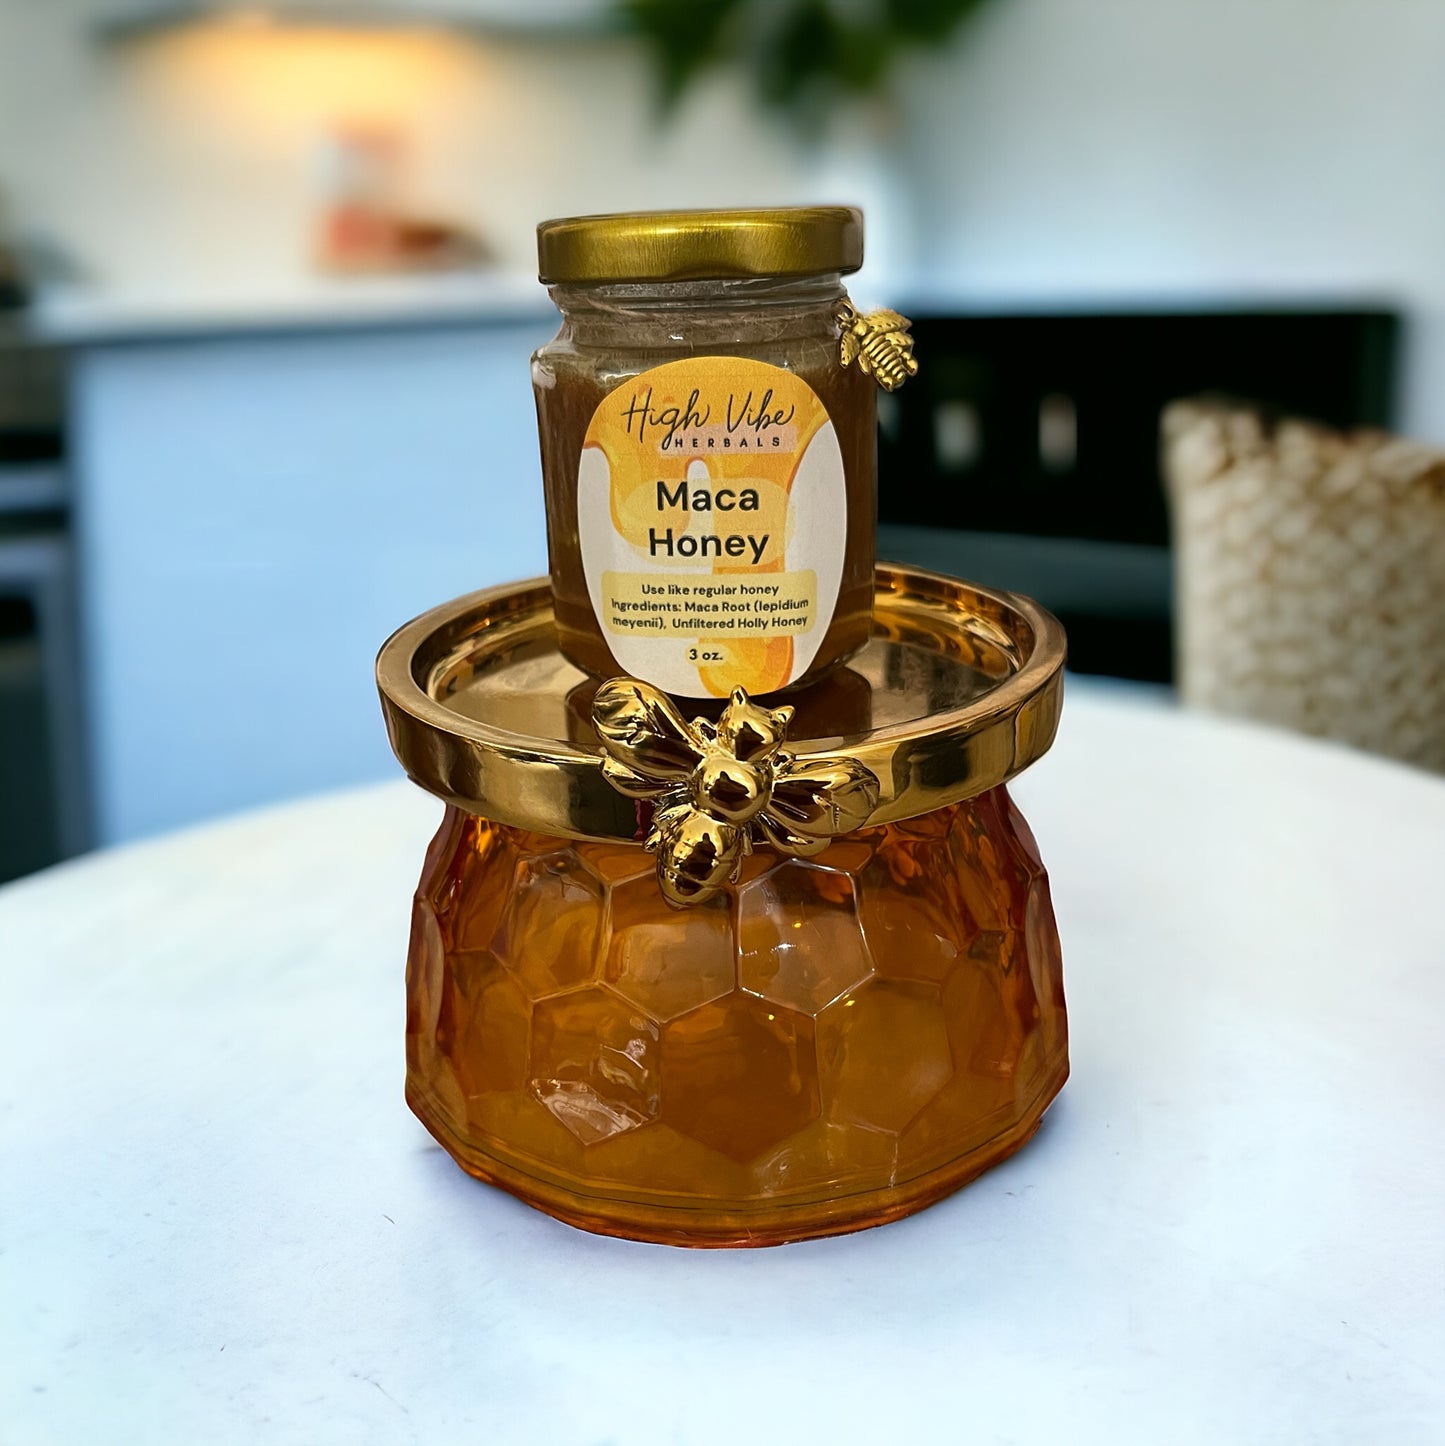 Maca infused honey